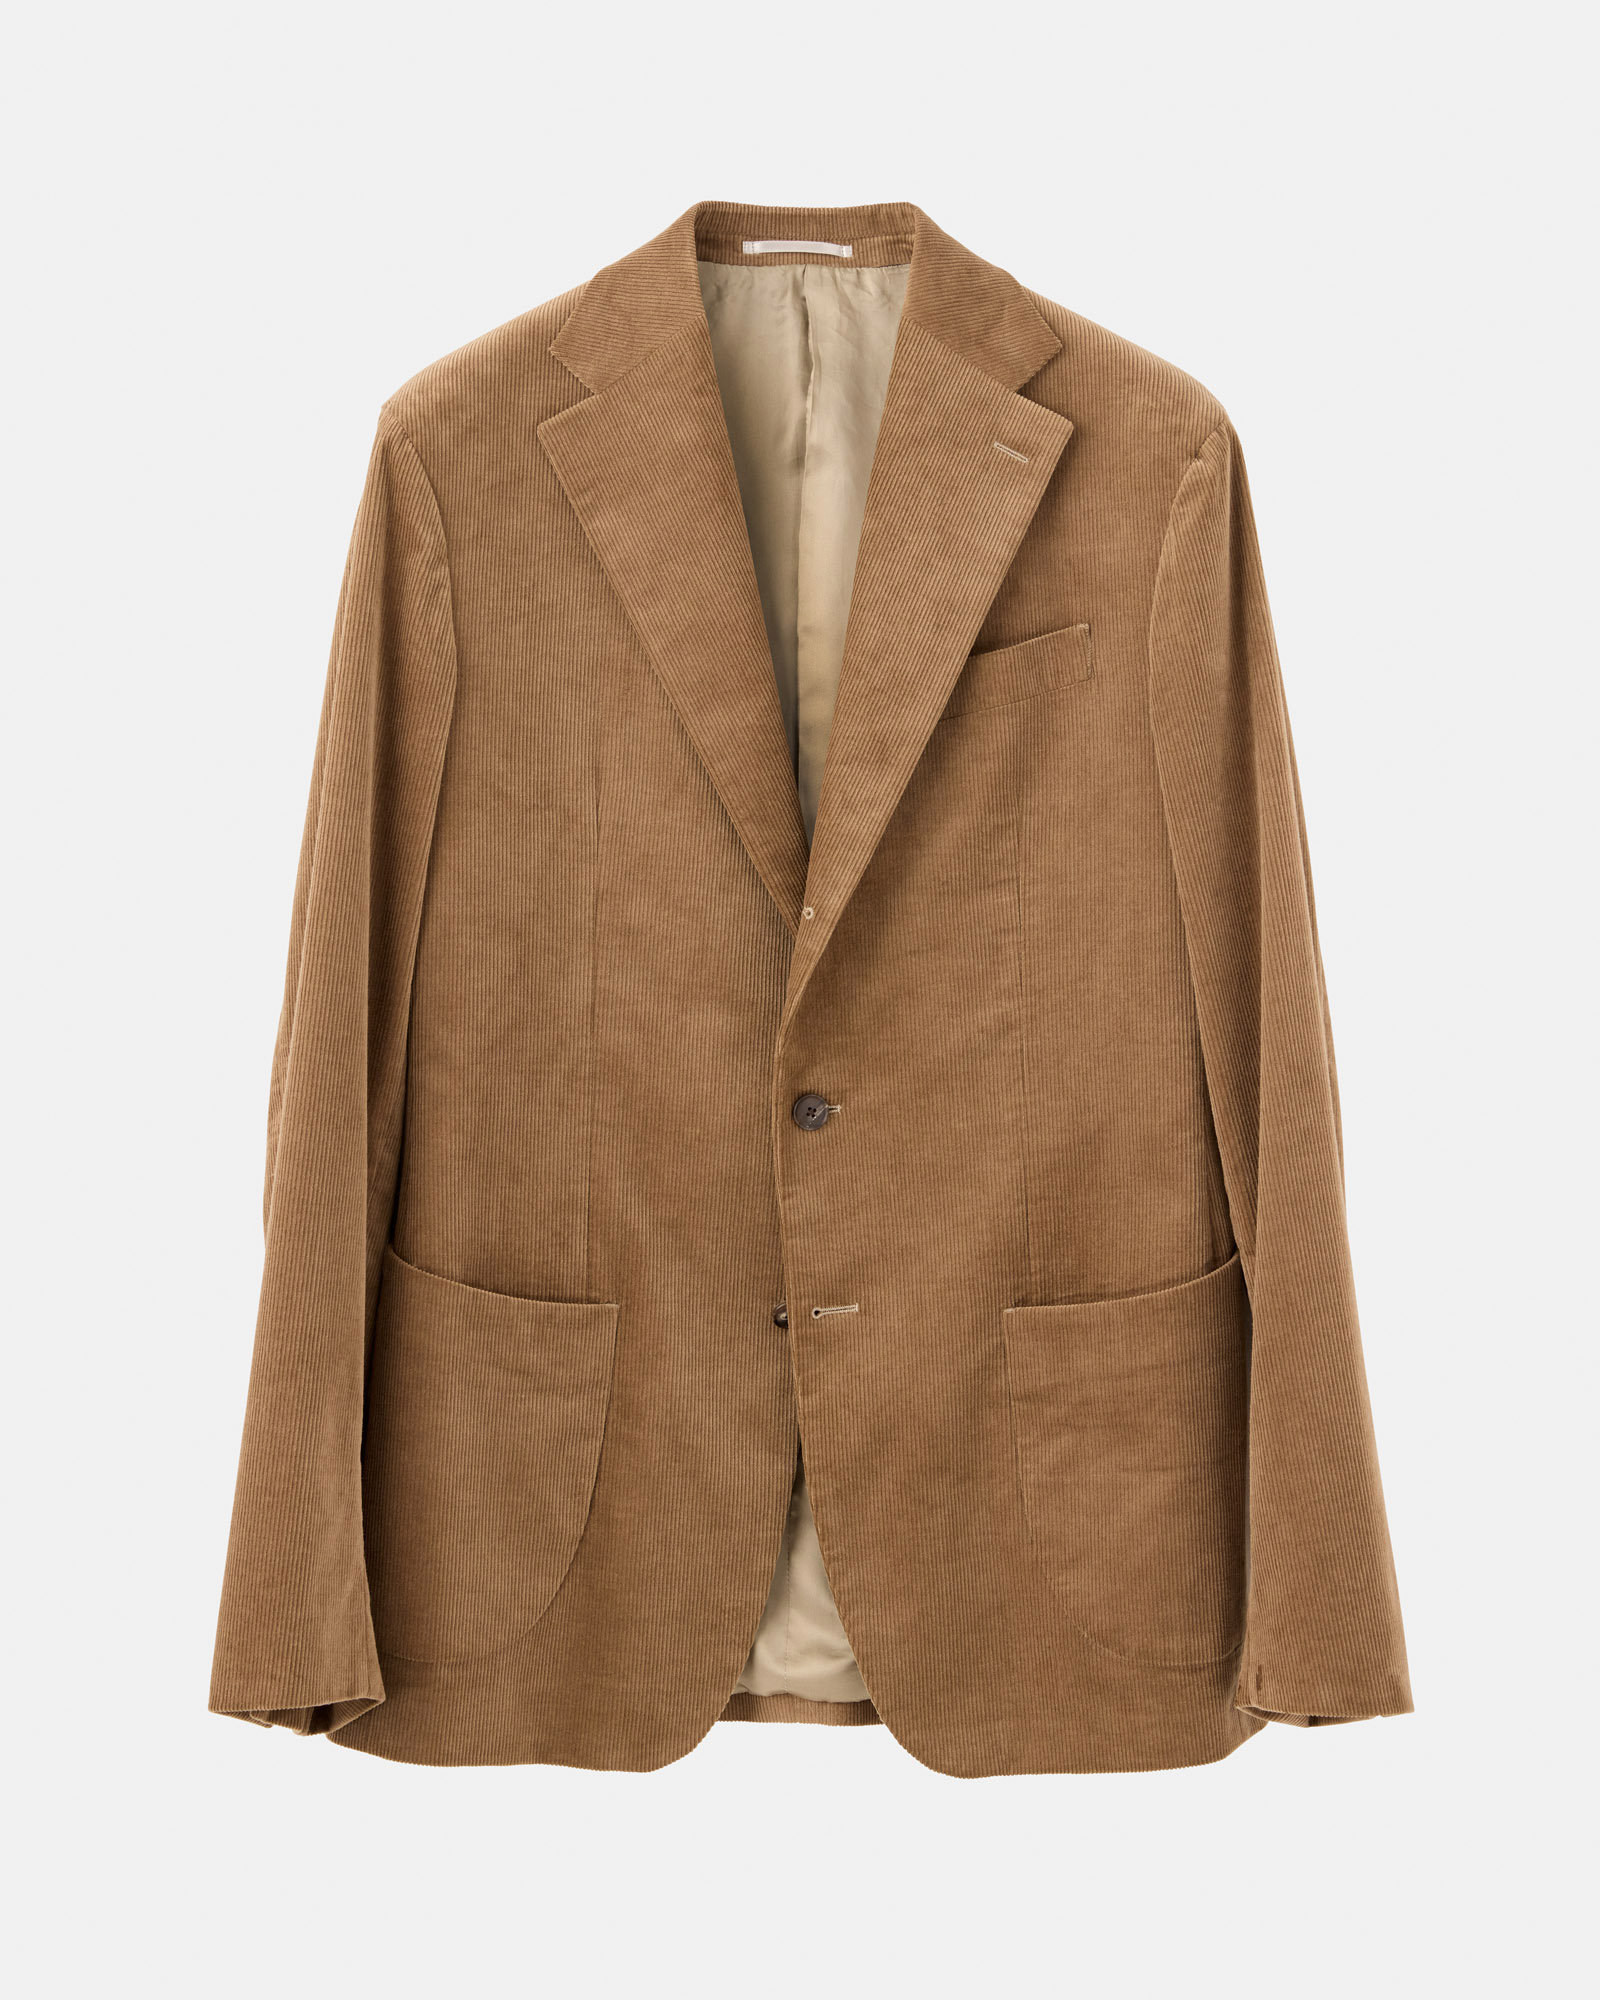 Jacket corduroy brown image 1